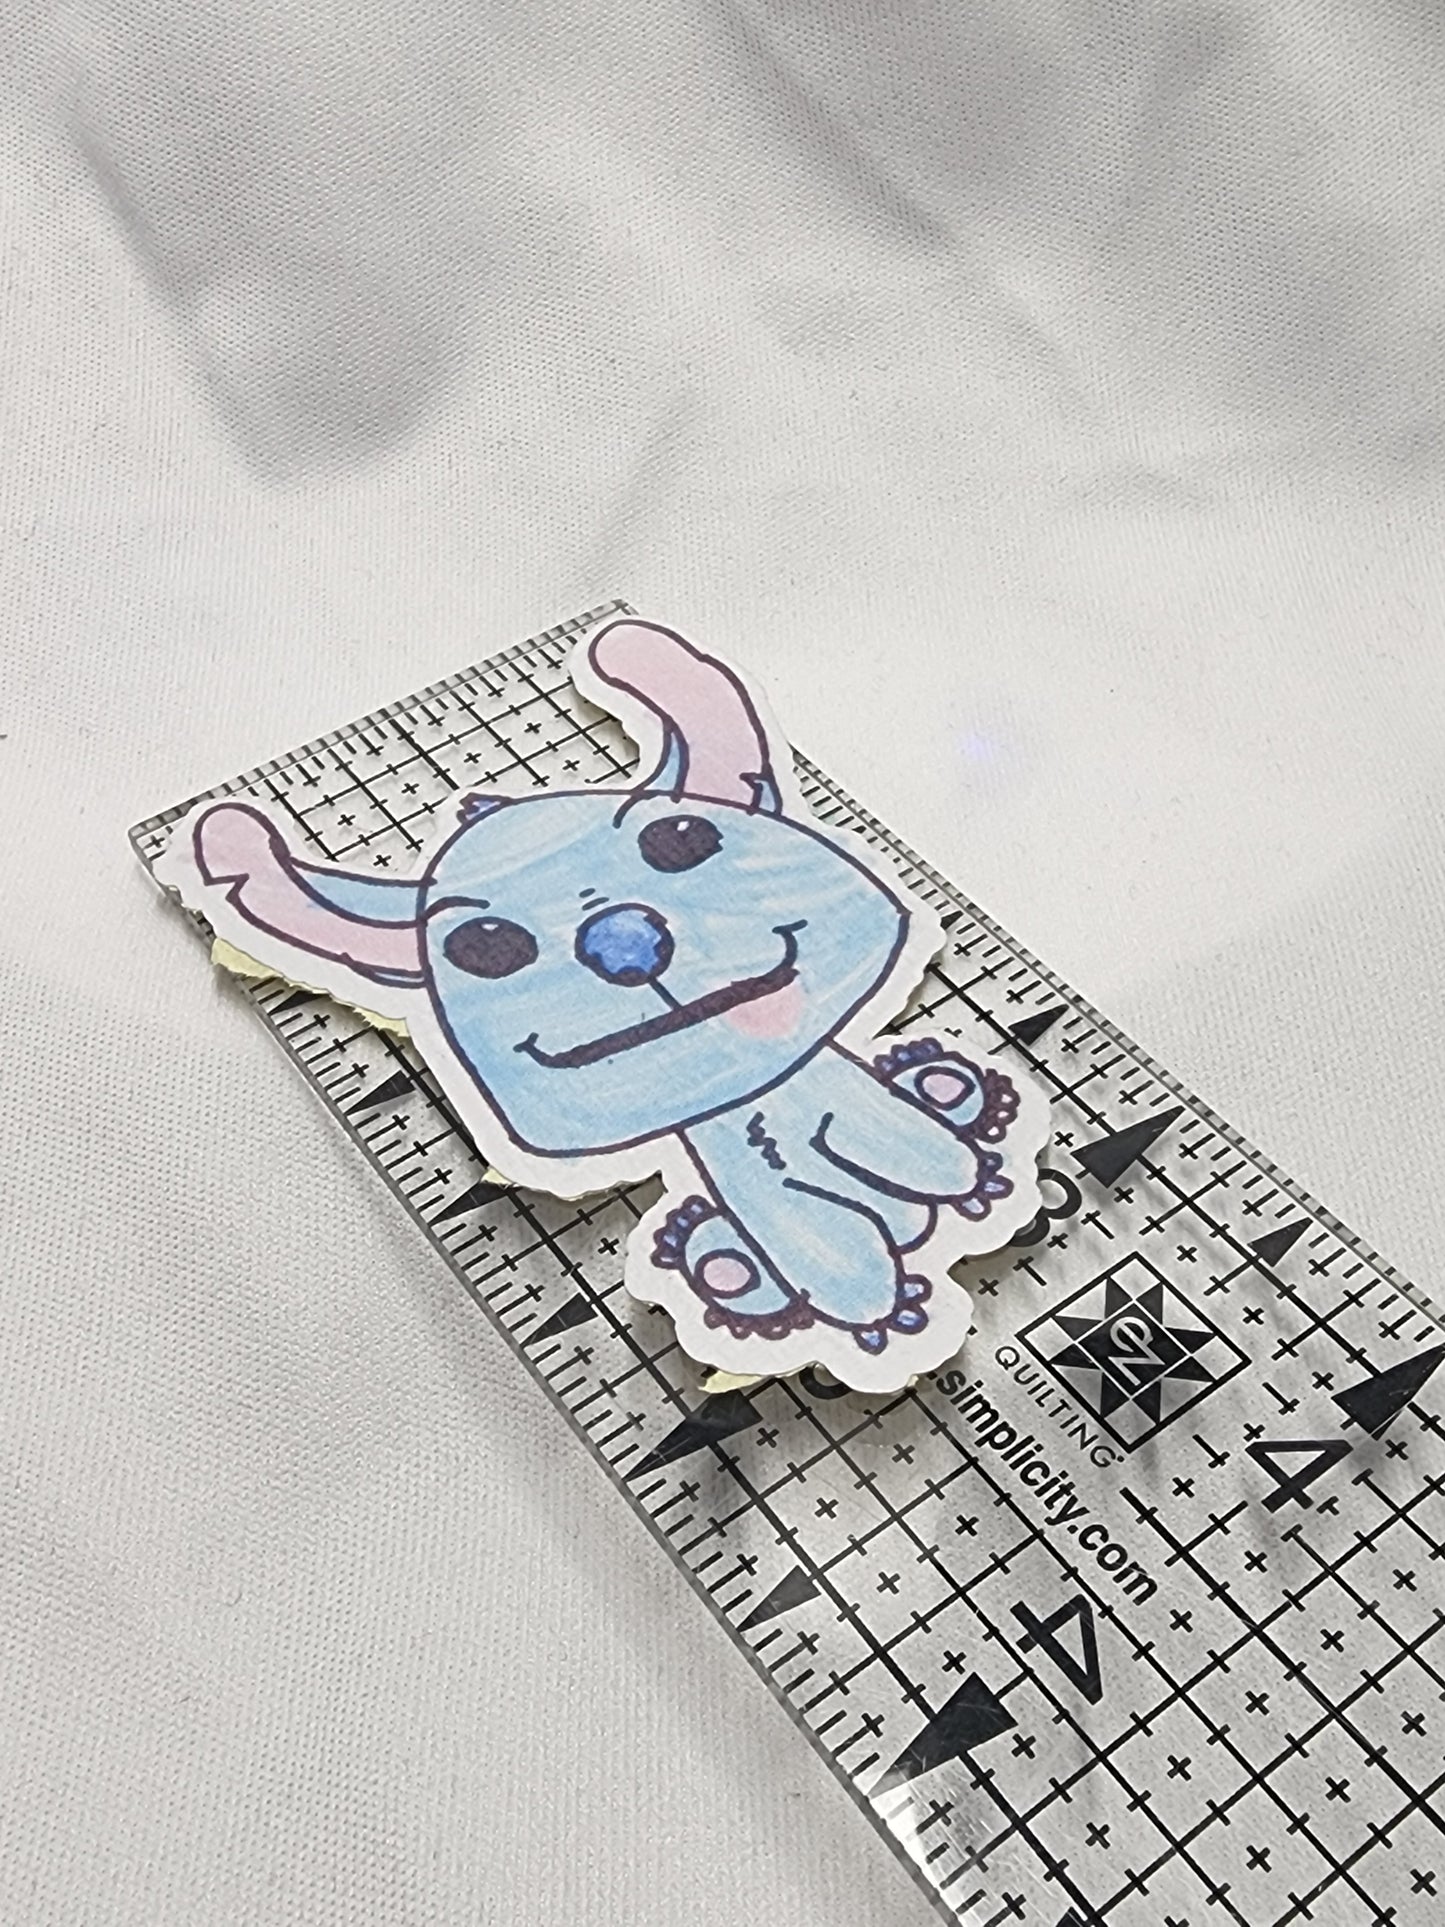 Stitch sticker